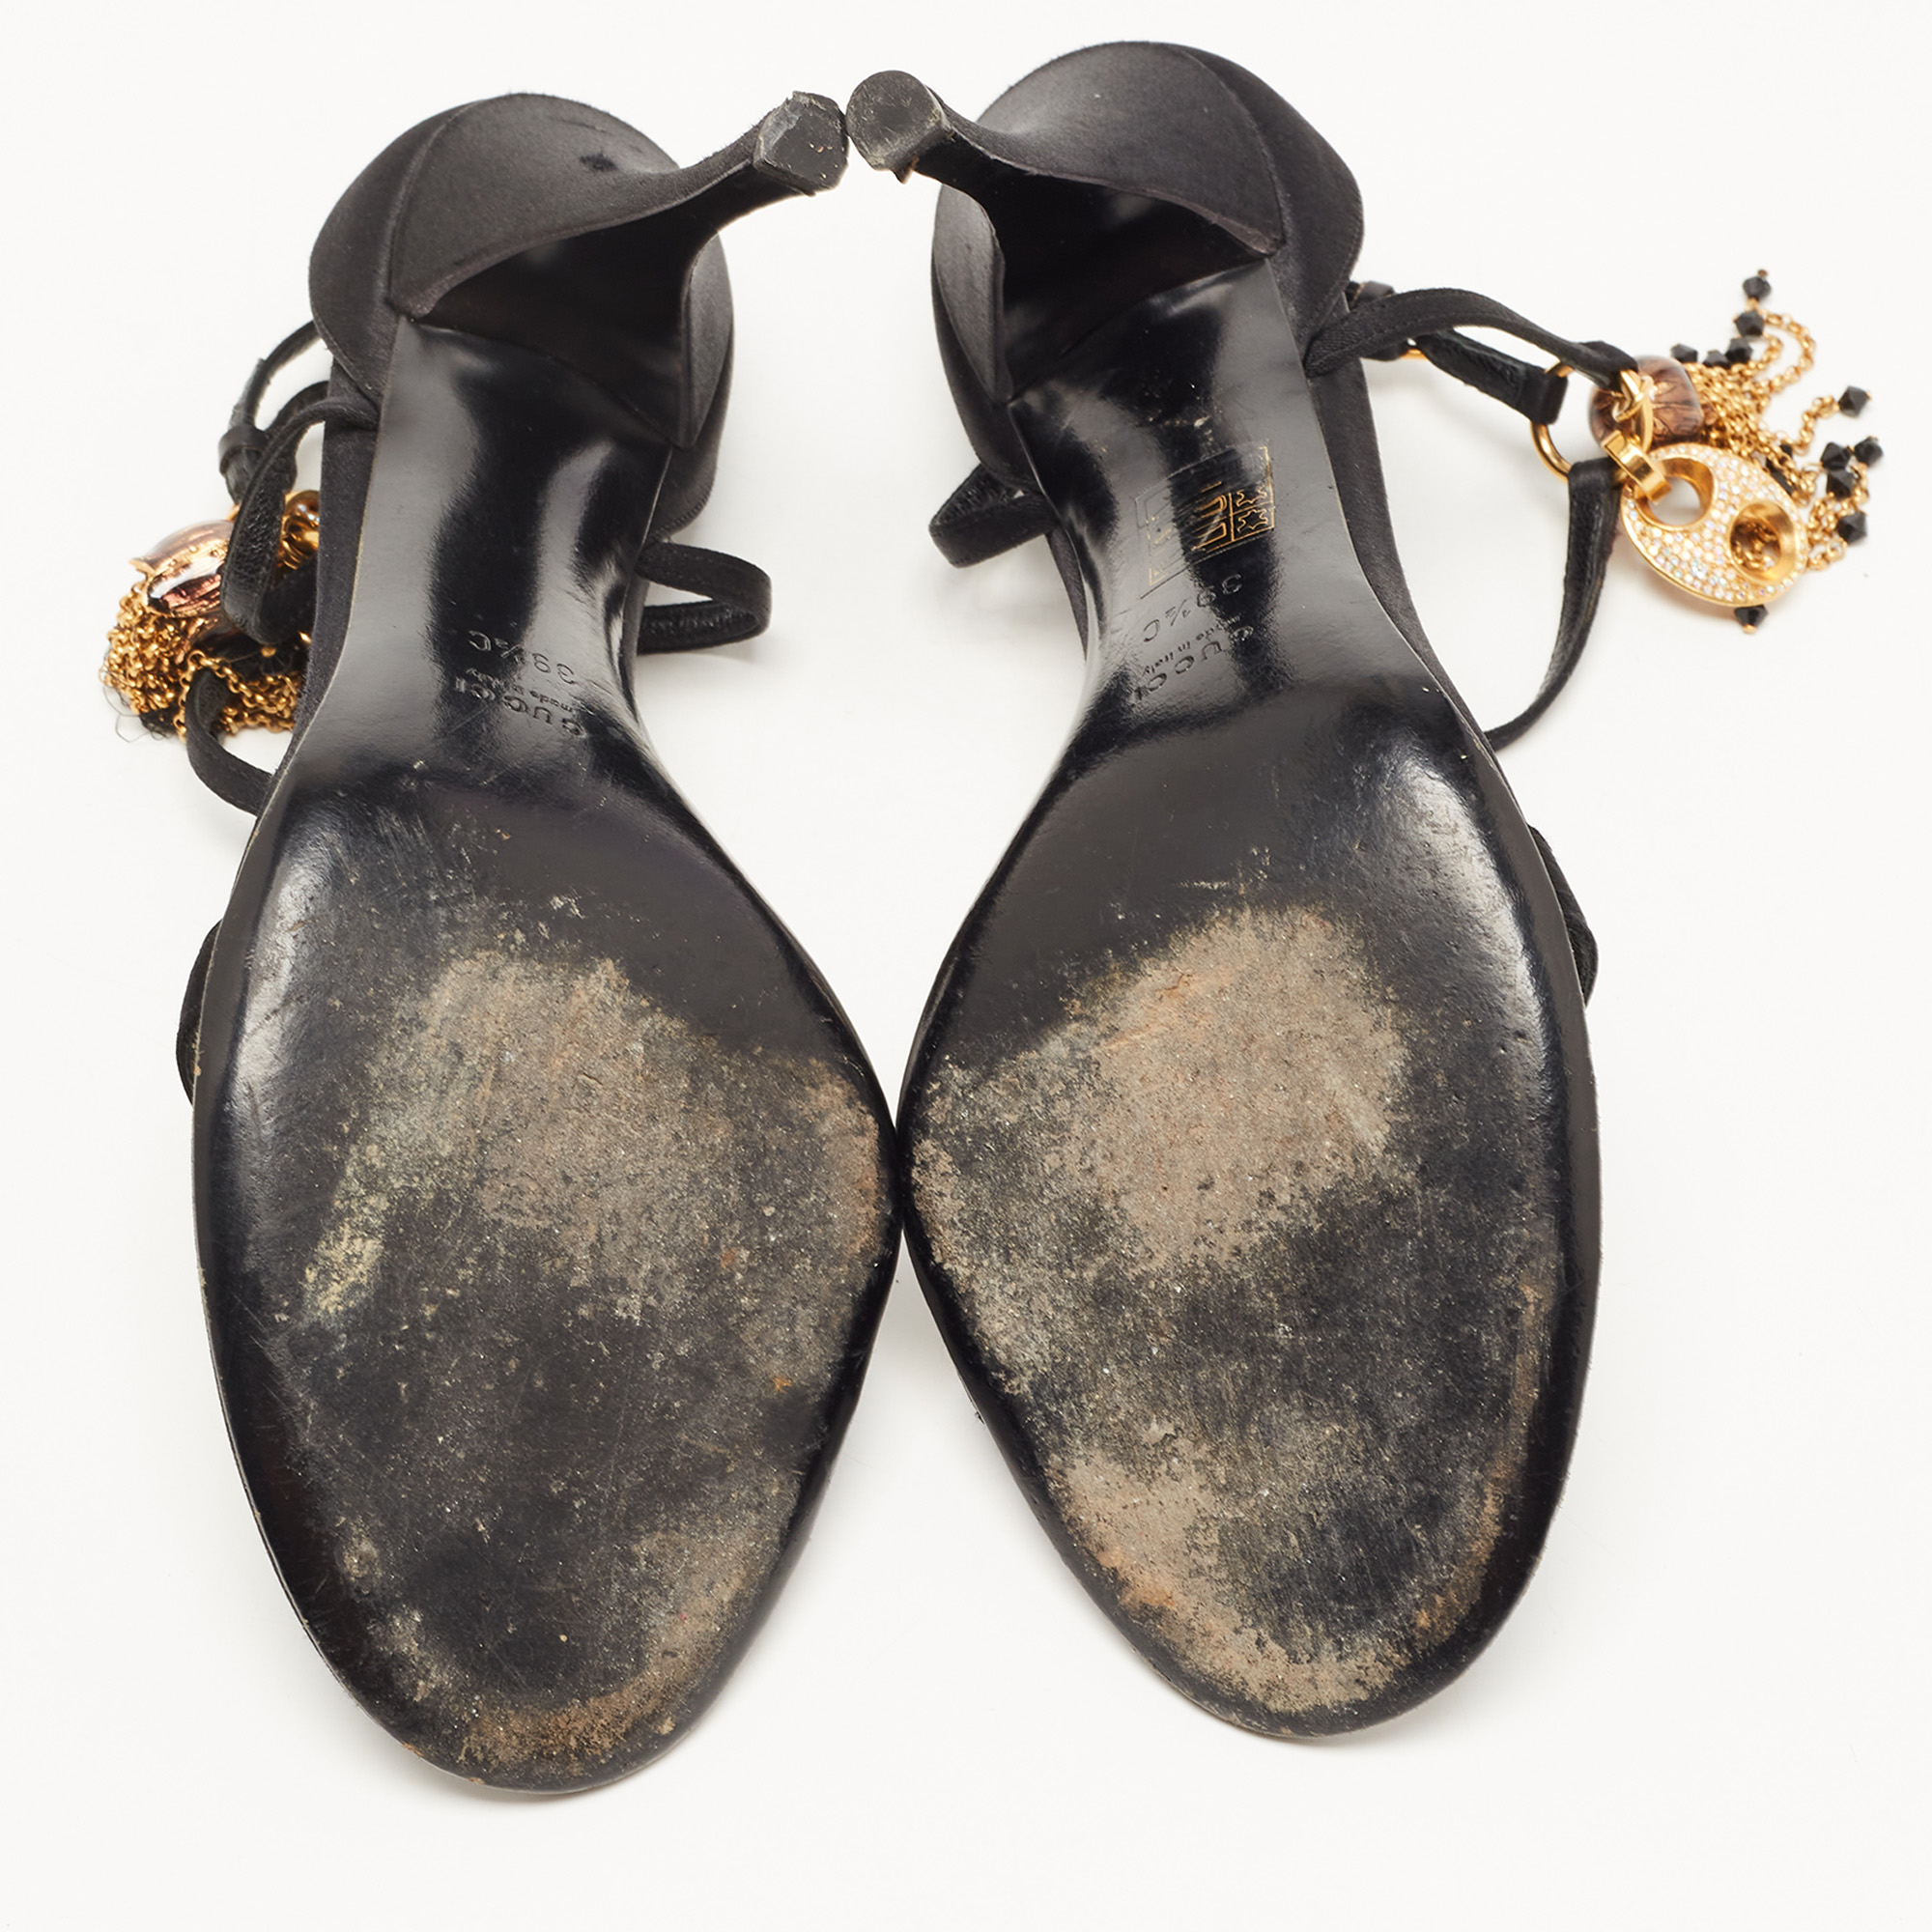 Gucci Black Satin Charms Embellished Ankle Strap Sandals Size 39.5